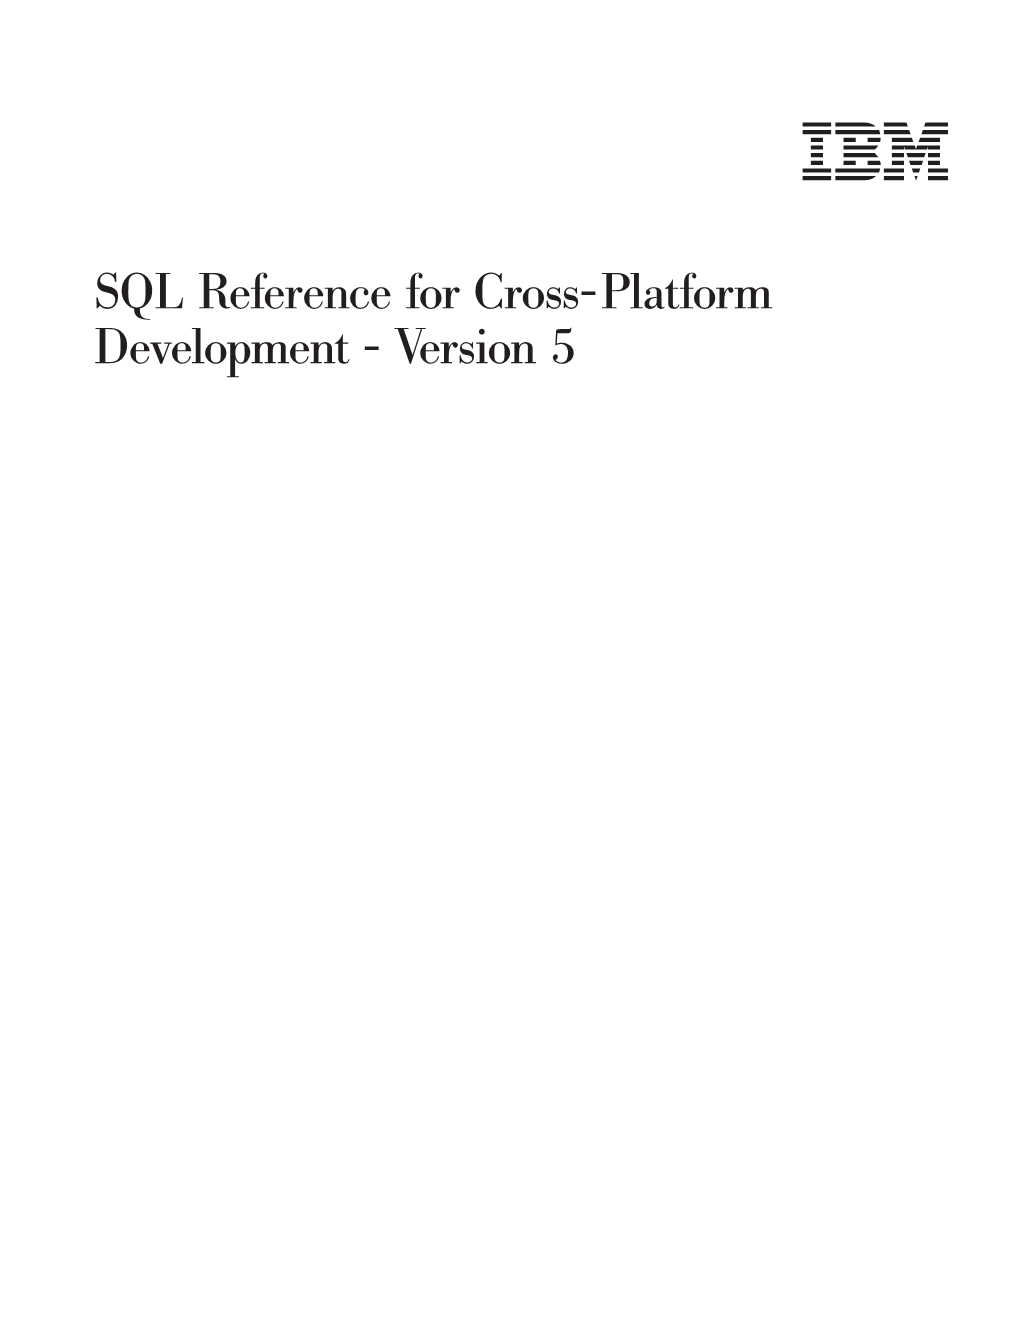 SQL Reference for Cross-Platform Development - Version 5 Ii SQL Reference for Cross-Platform Development - Version 5 Contents